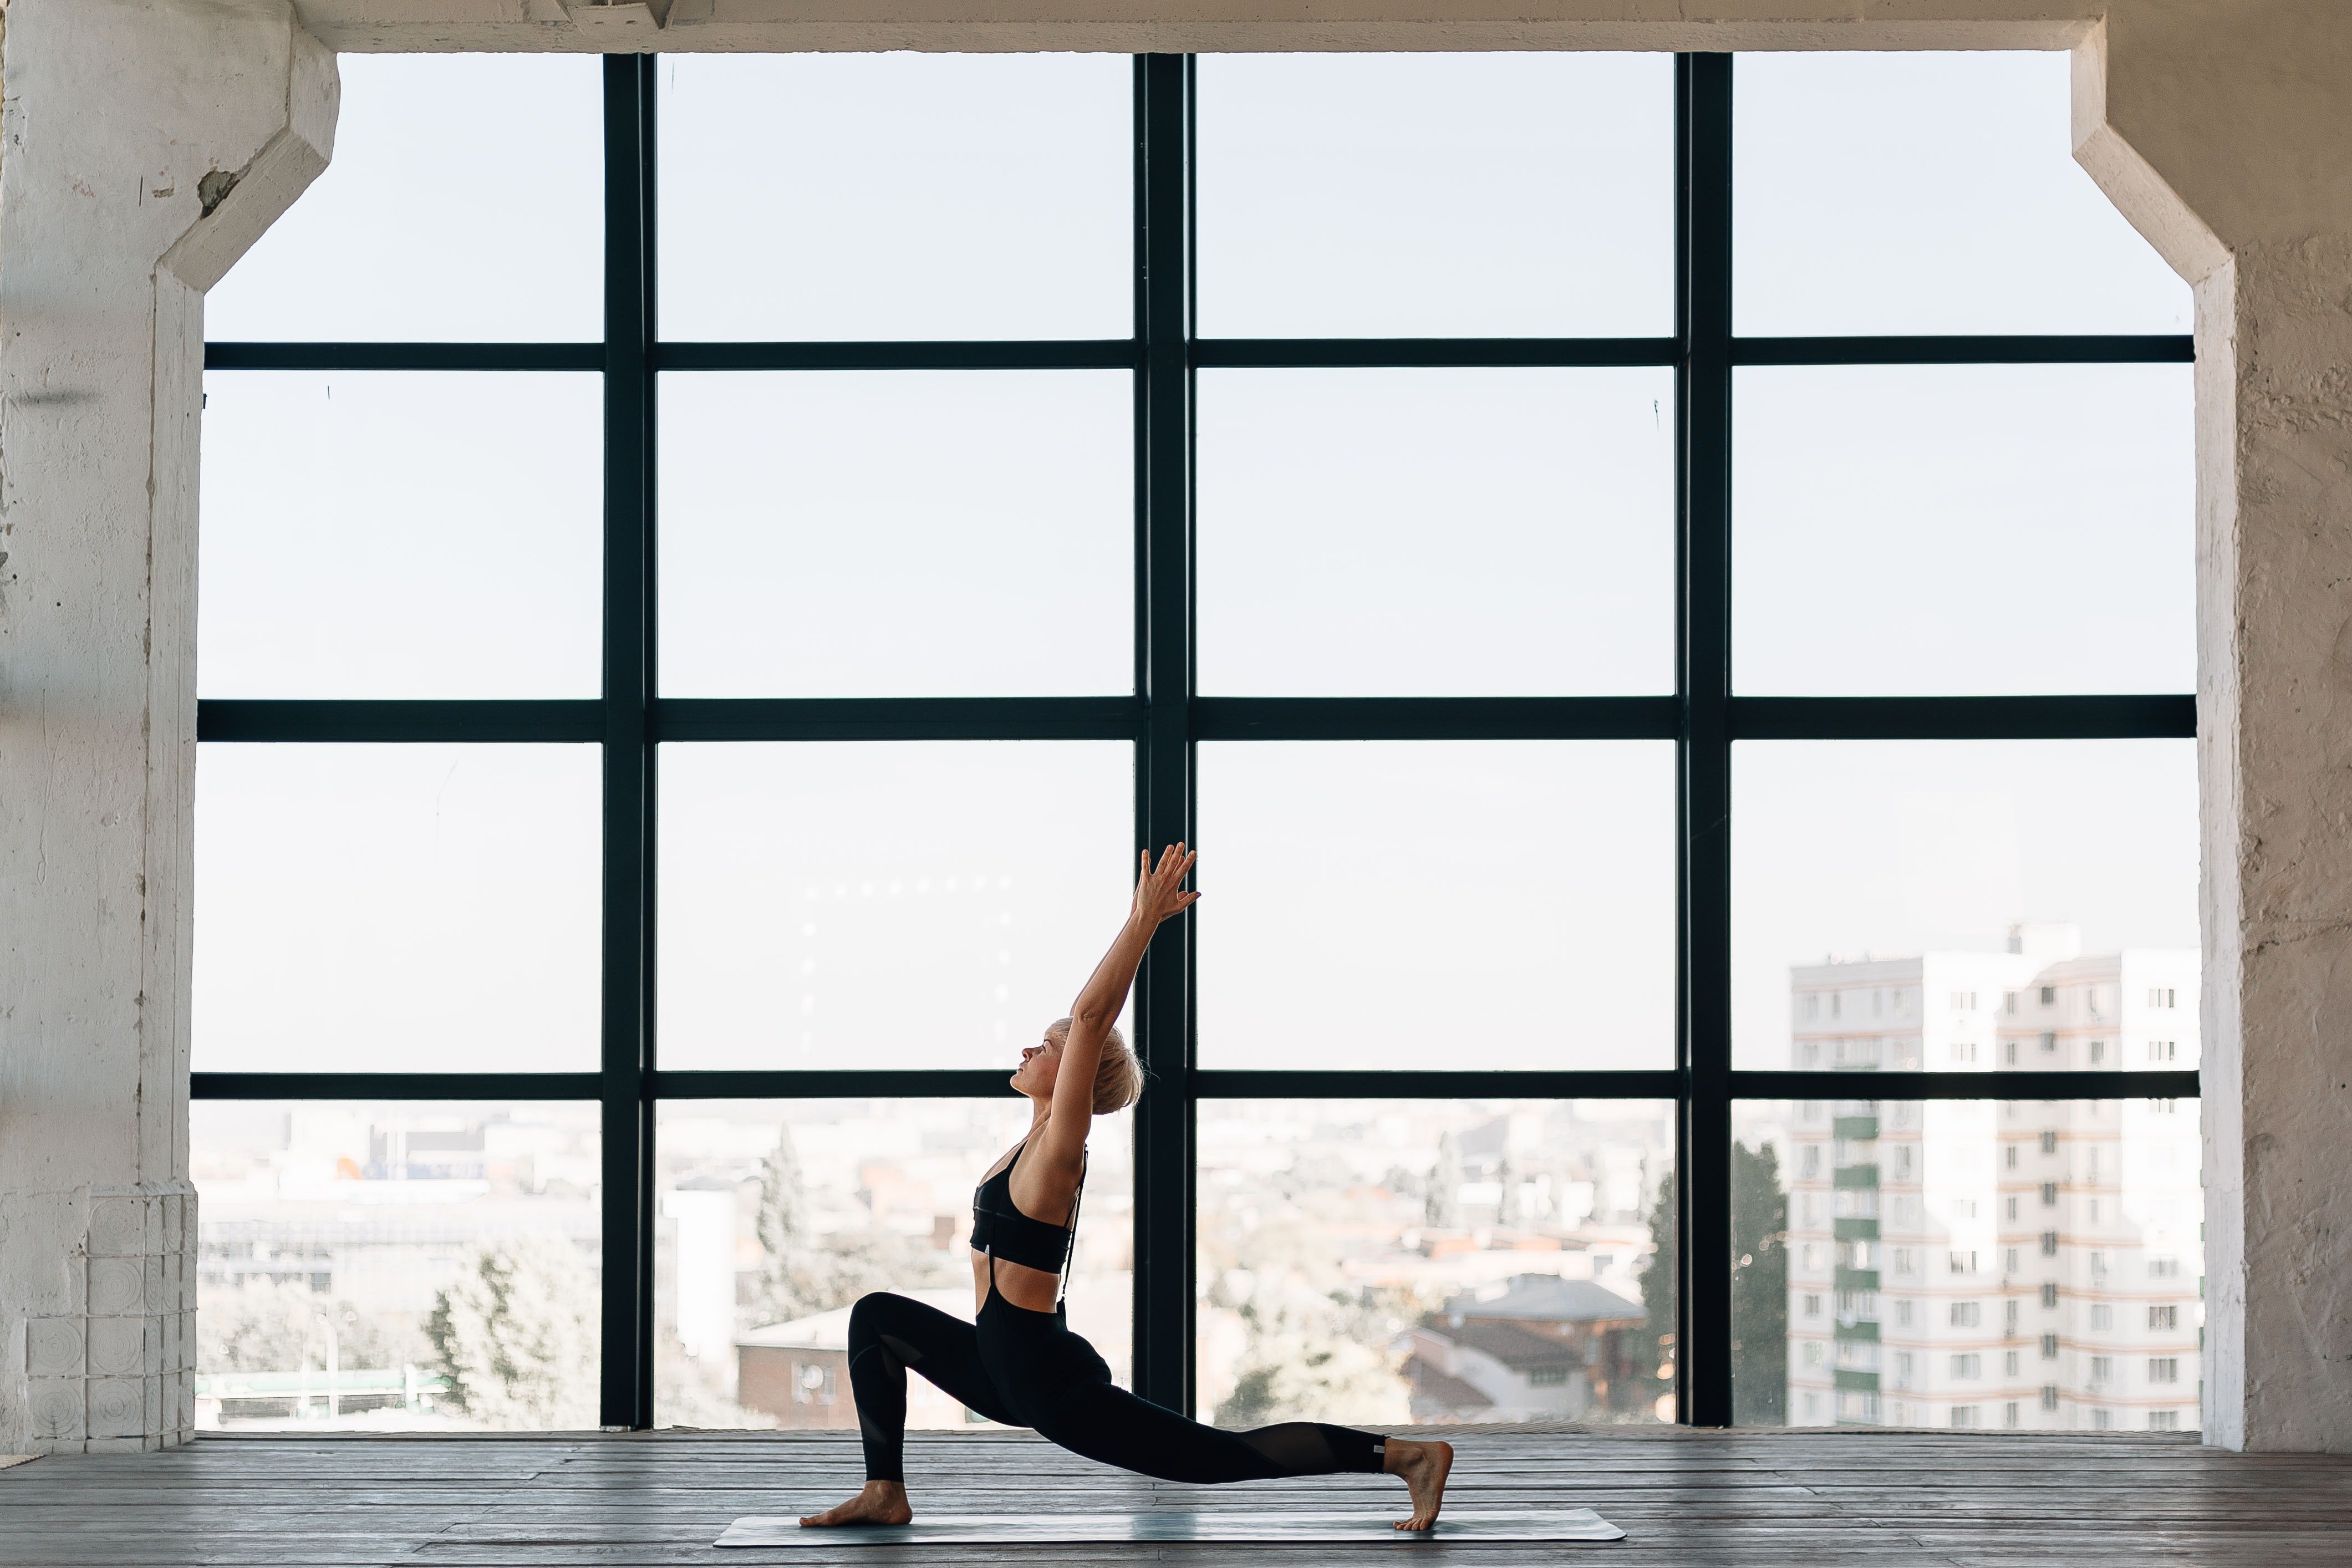 Mujer practicando yoga / Unsplash